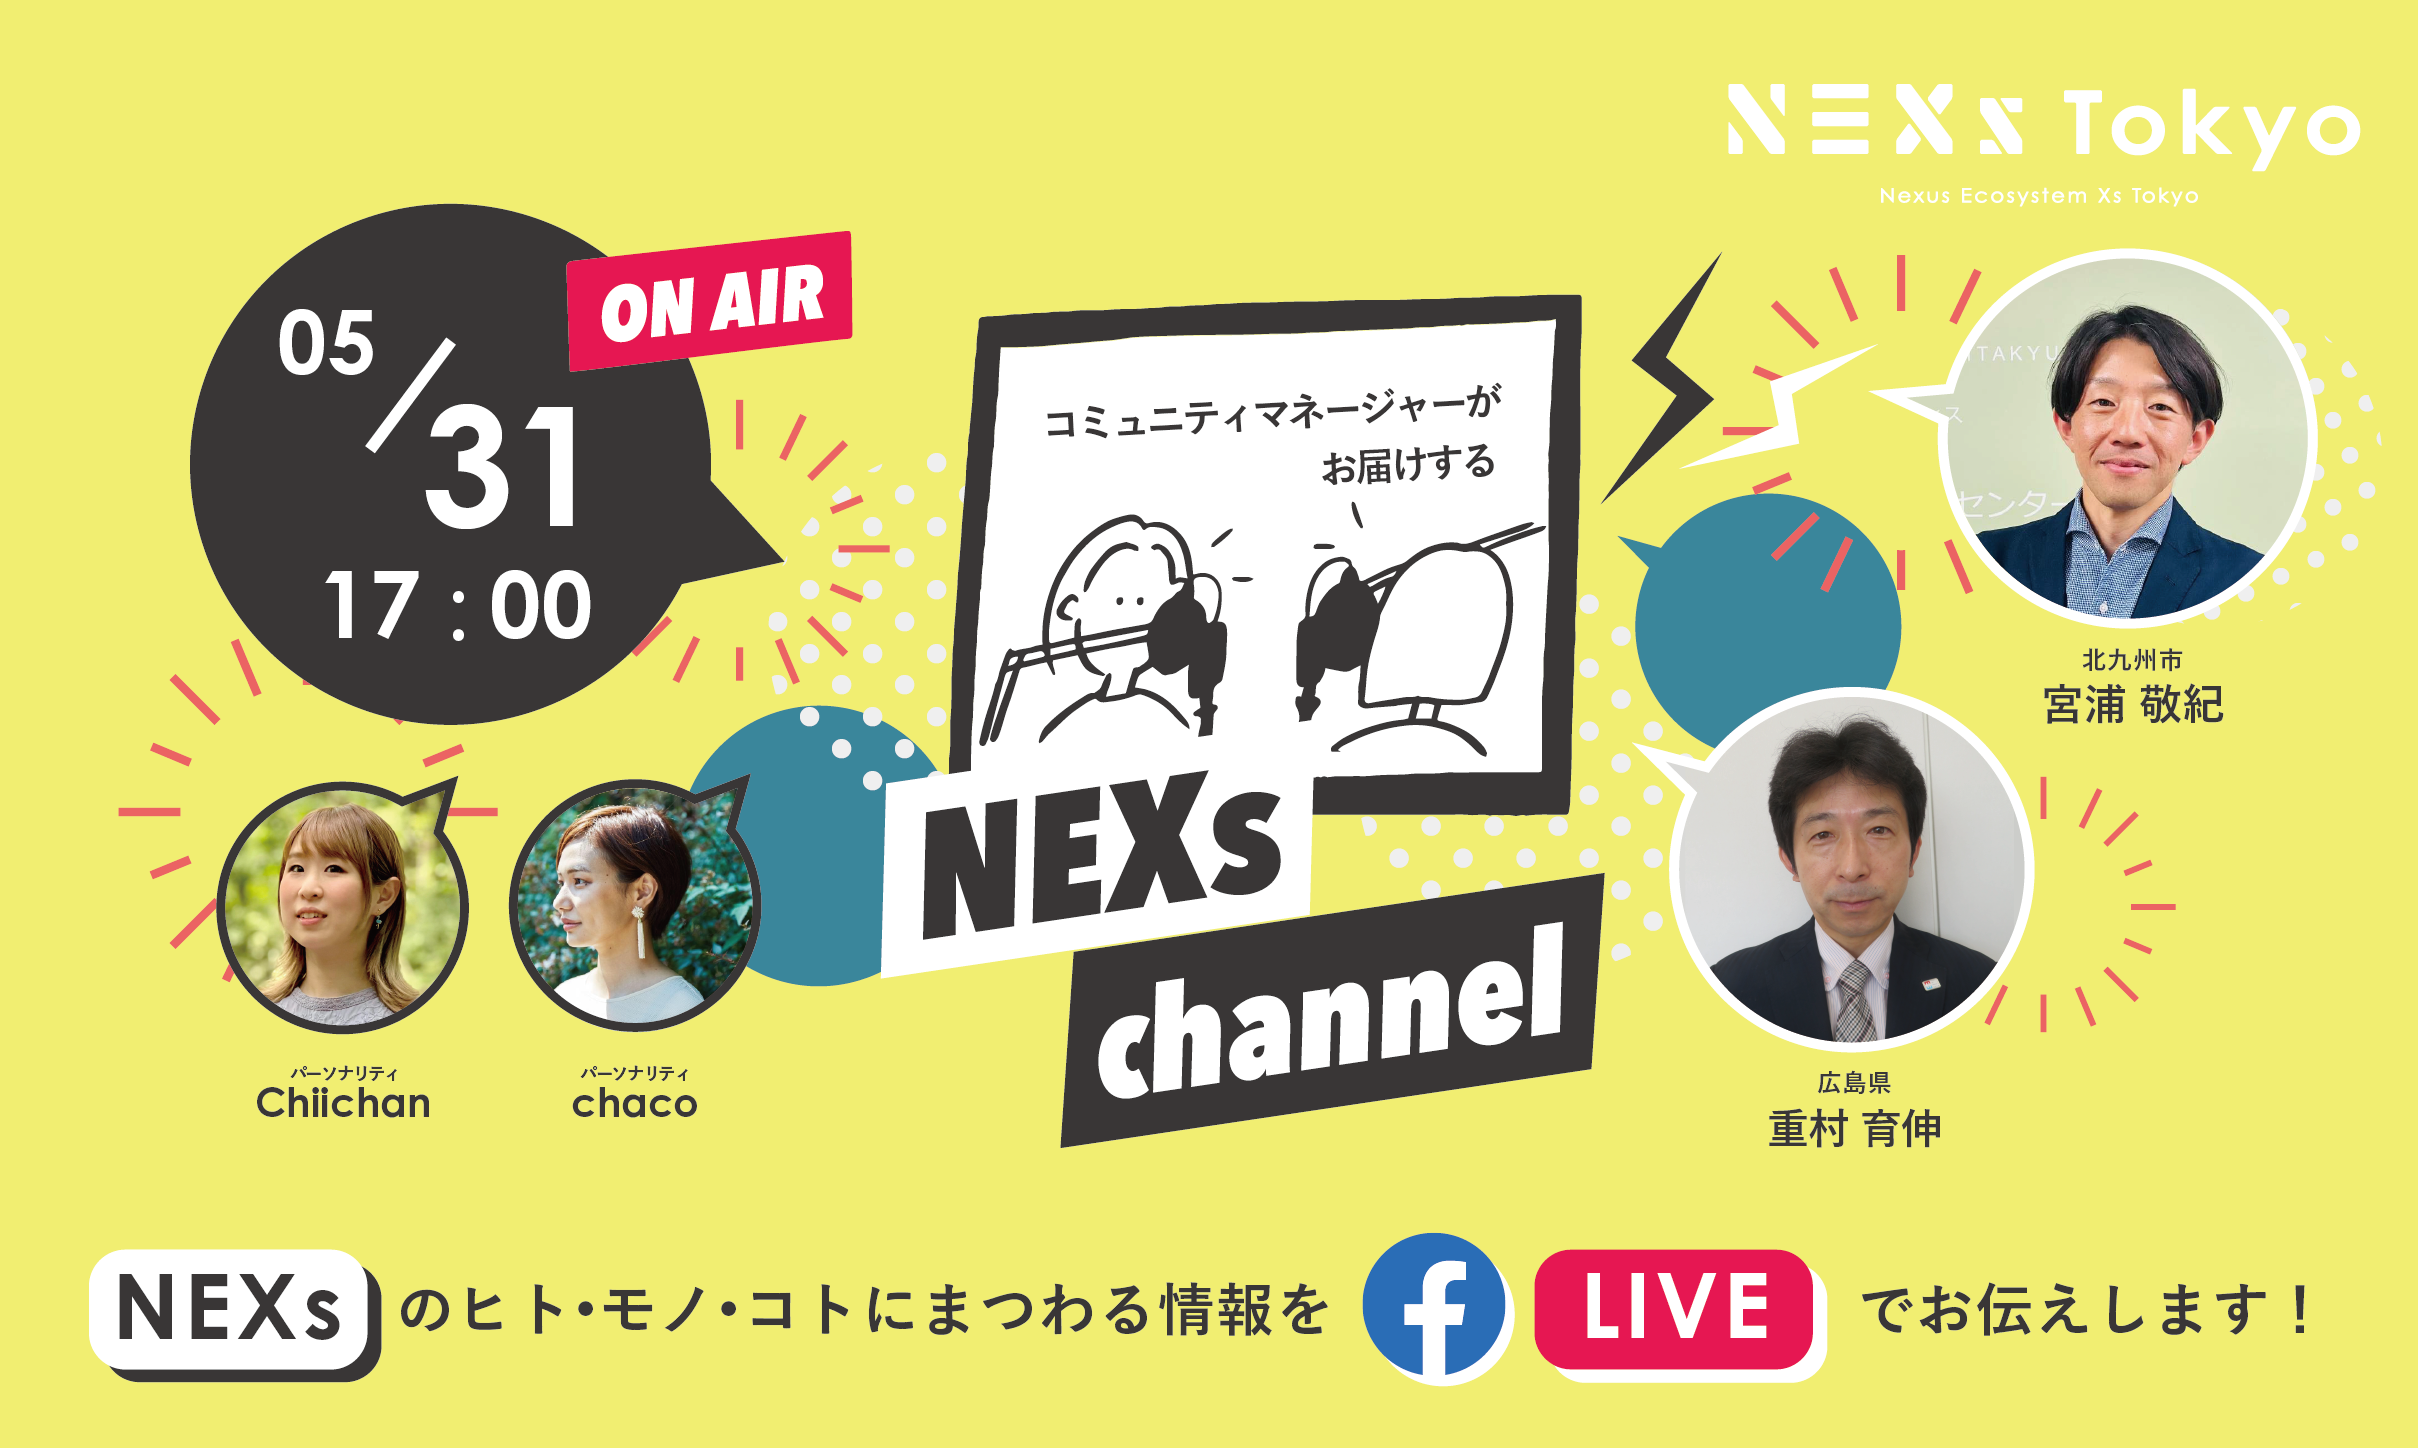 NEXs channel #28 -NEXs Tokyoのヒト・モノ・コトを特設ラジオブースから生放送でお届け！-